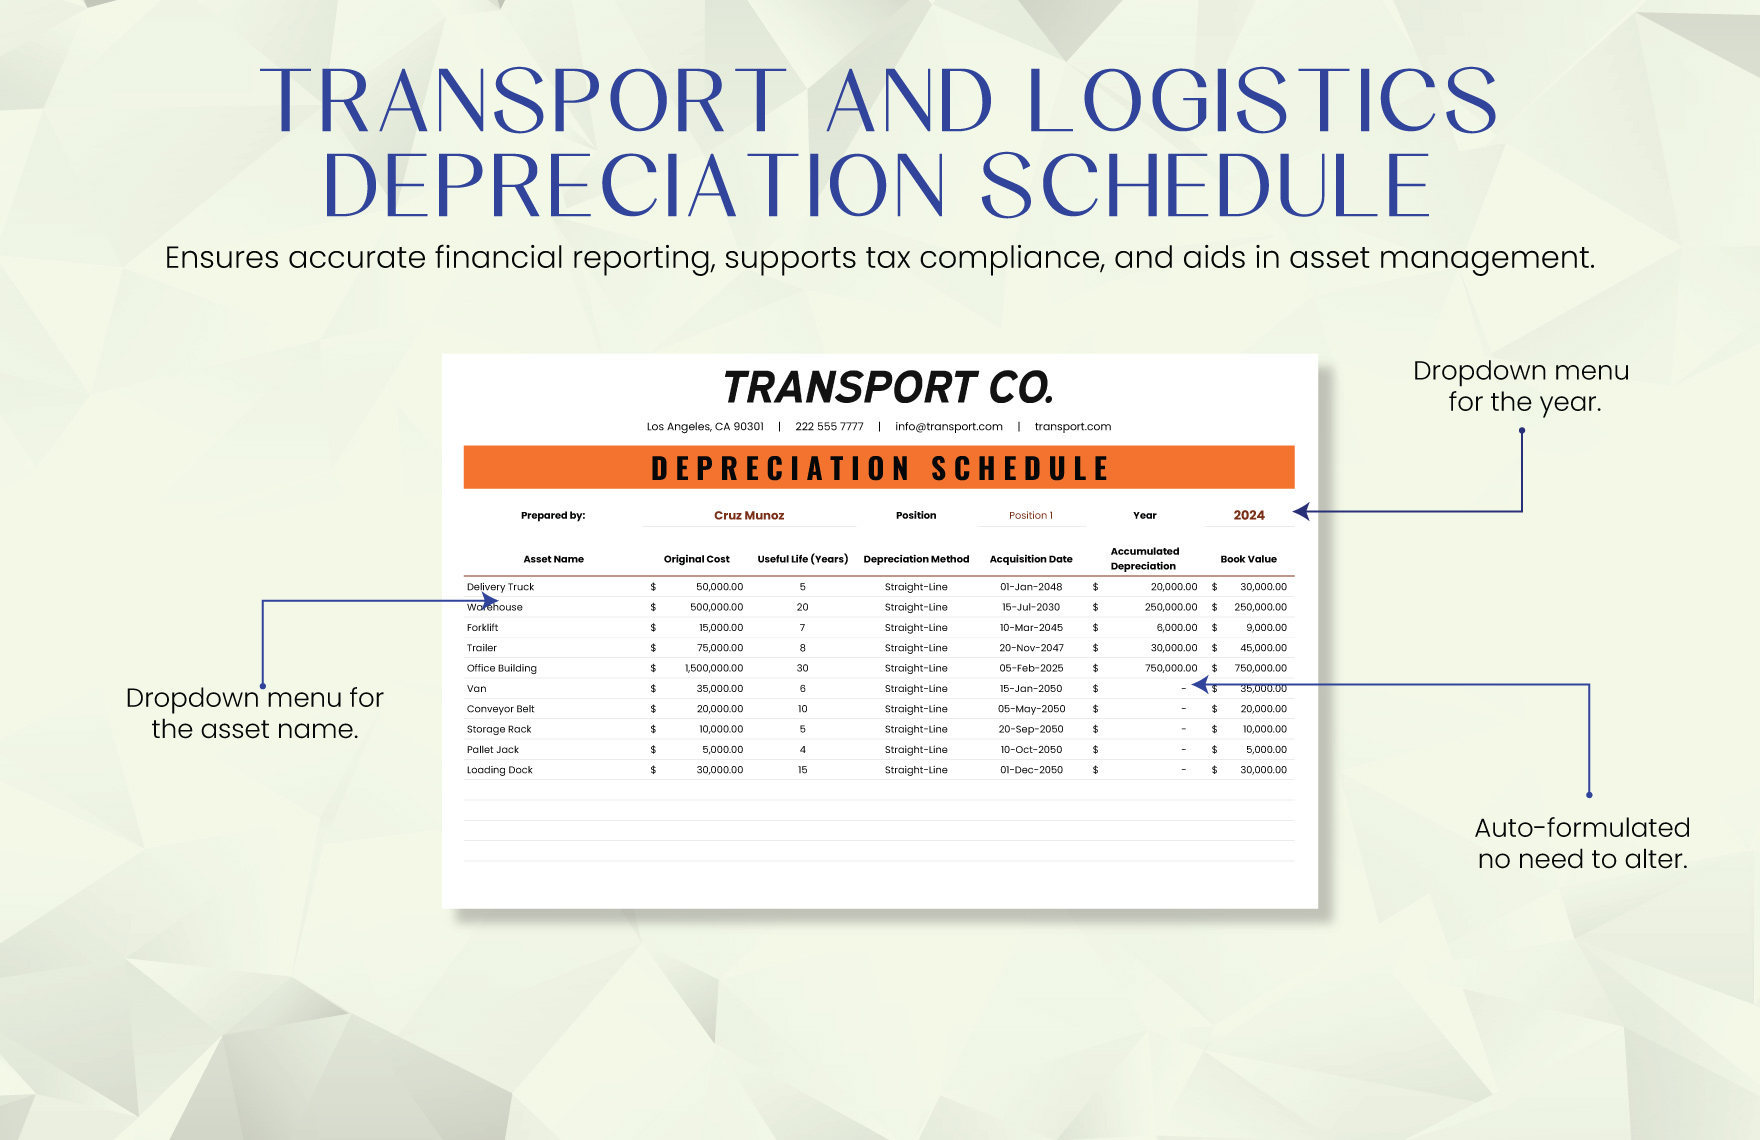 Transport and Logistics Depreciation Schedule Template